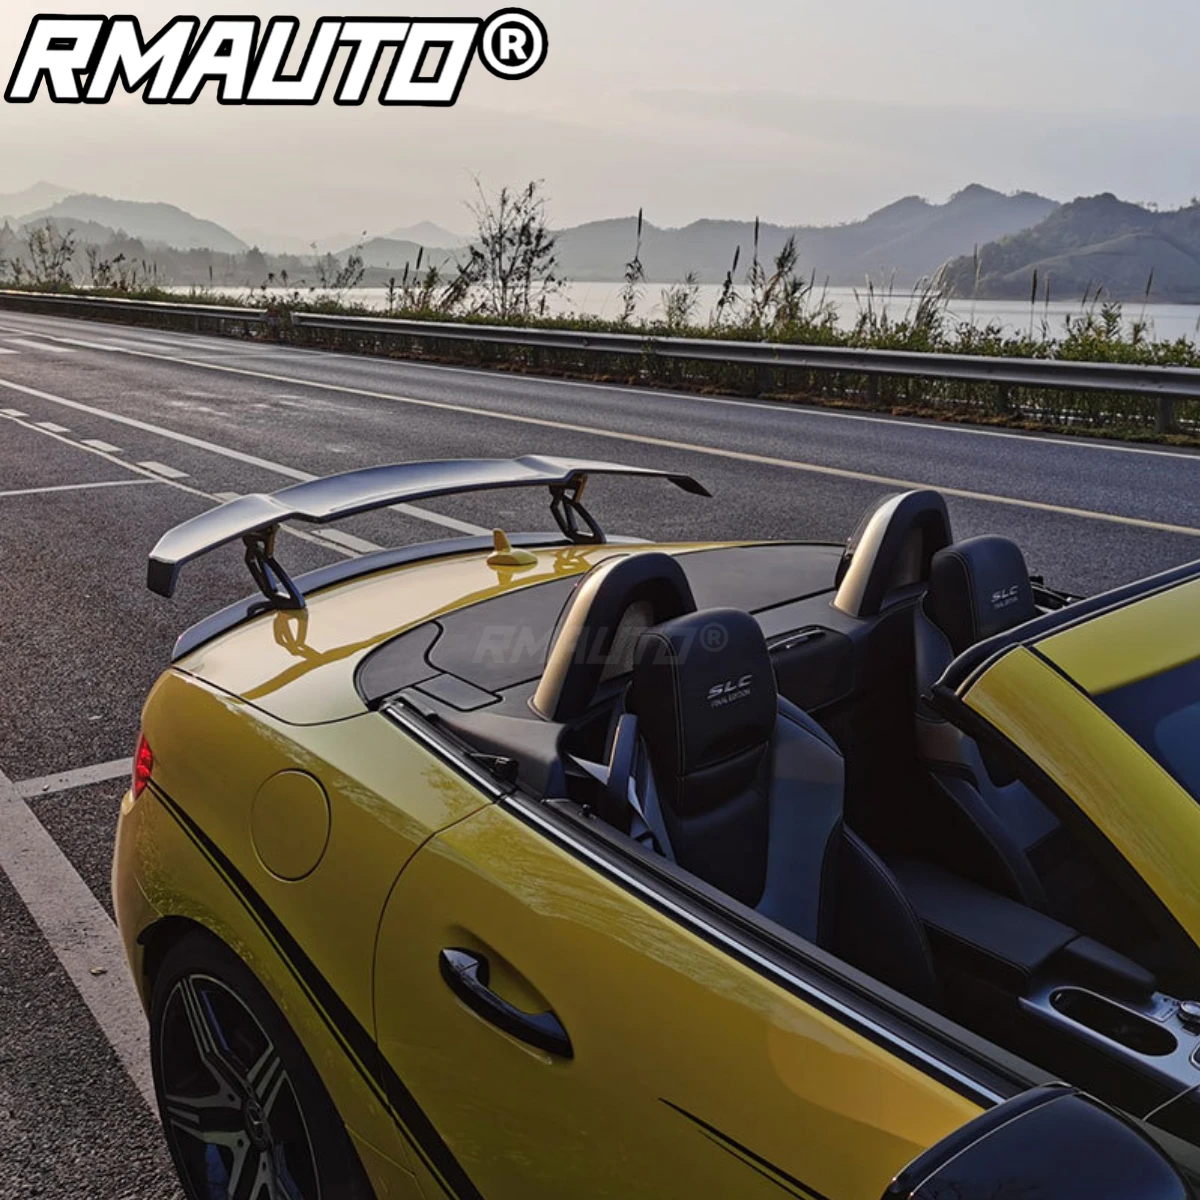 

RMAUTO Real Carbon Fiber V Style Spoiler Universal Car Rear Trunk Spoiler Wing Body Kit For BMW E90 E93 F10 F30 G30 Car Spoiler